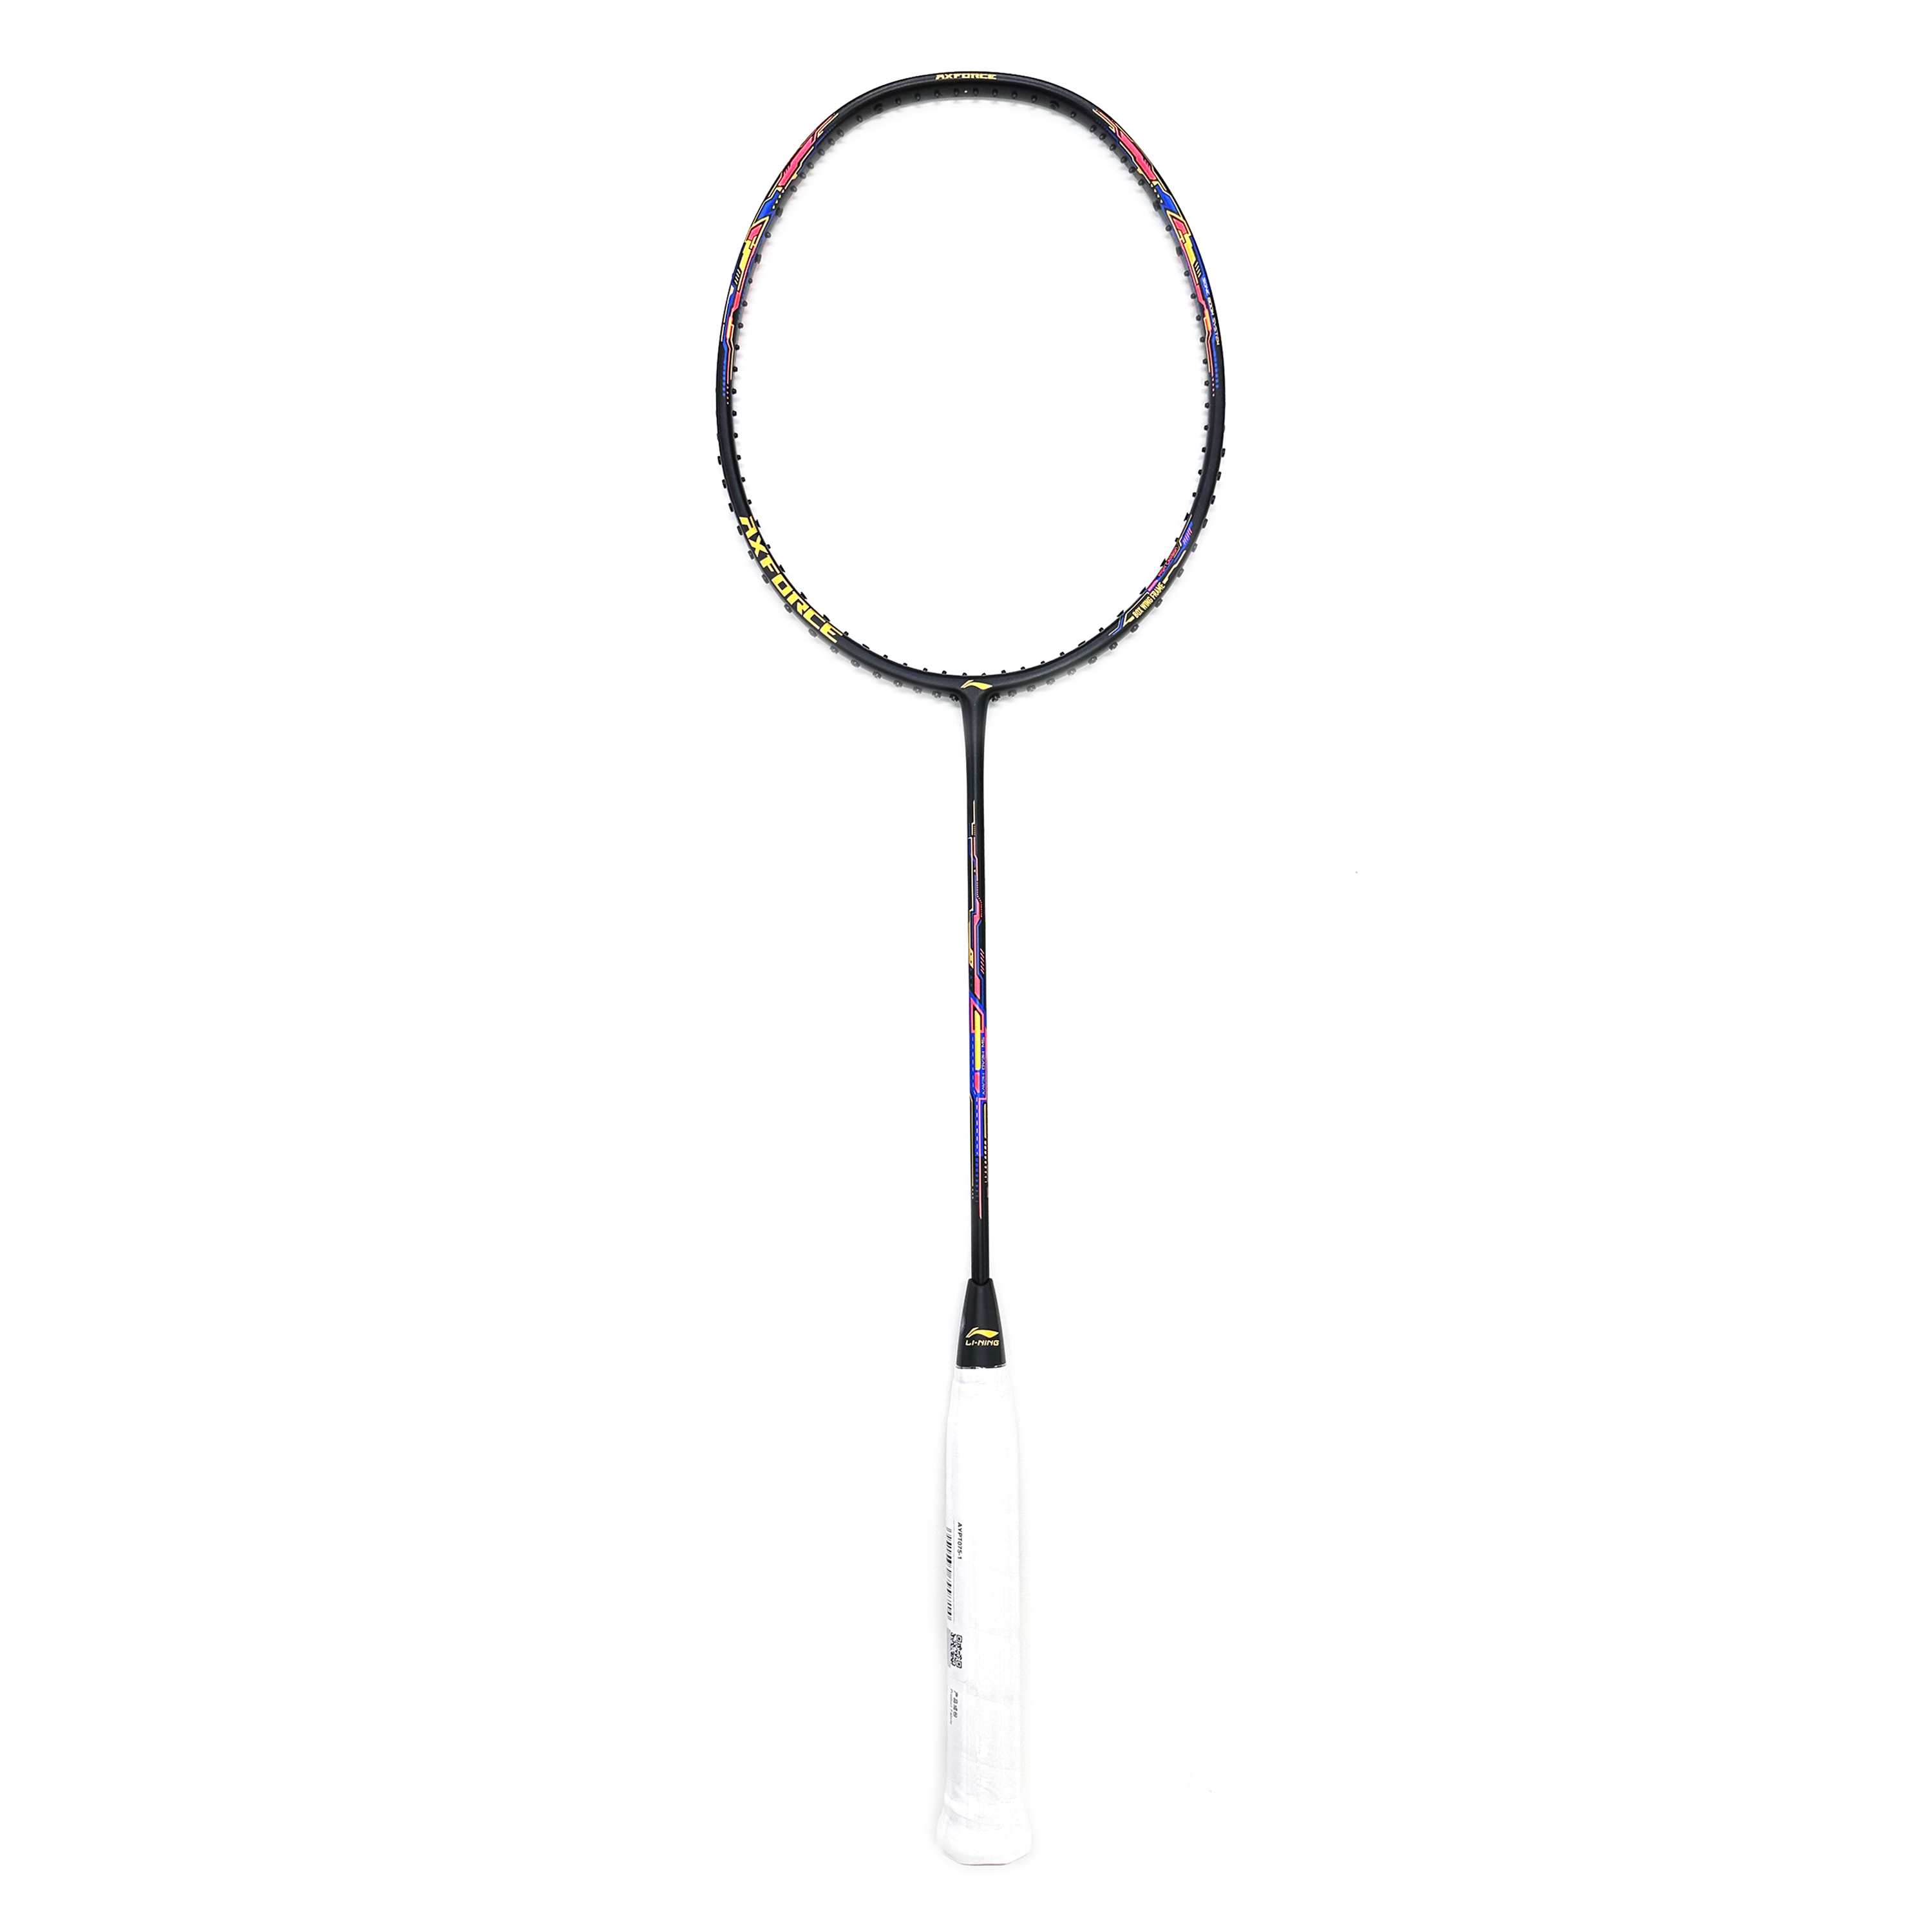 Li-Ning Axforce 20 R Series Badminton Racquet Black 4U(83g)G5